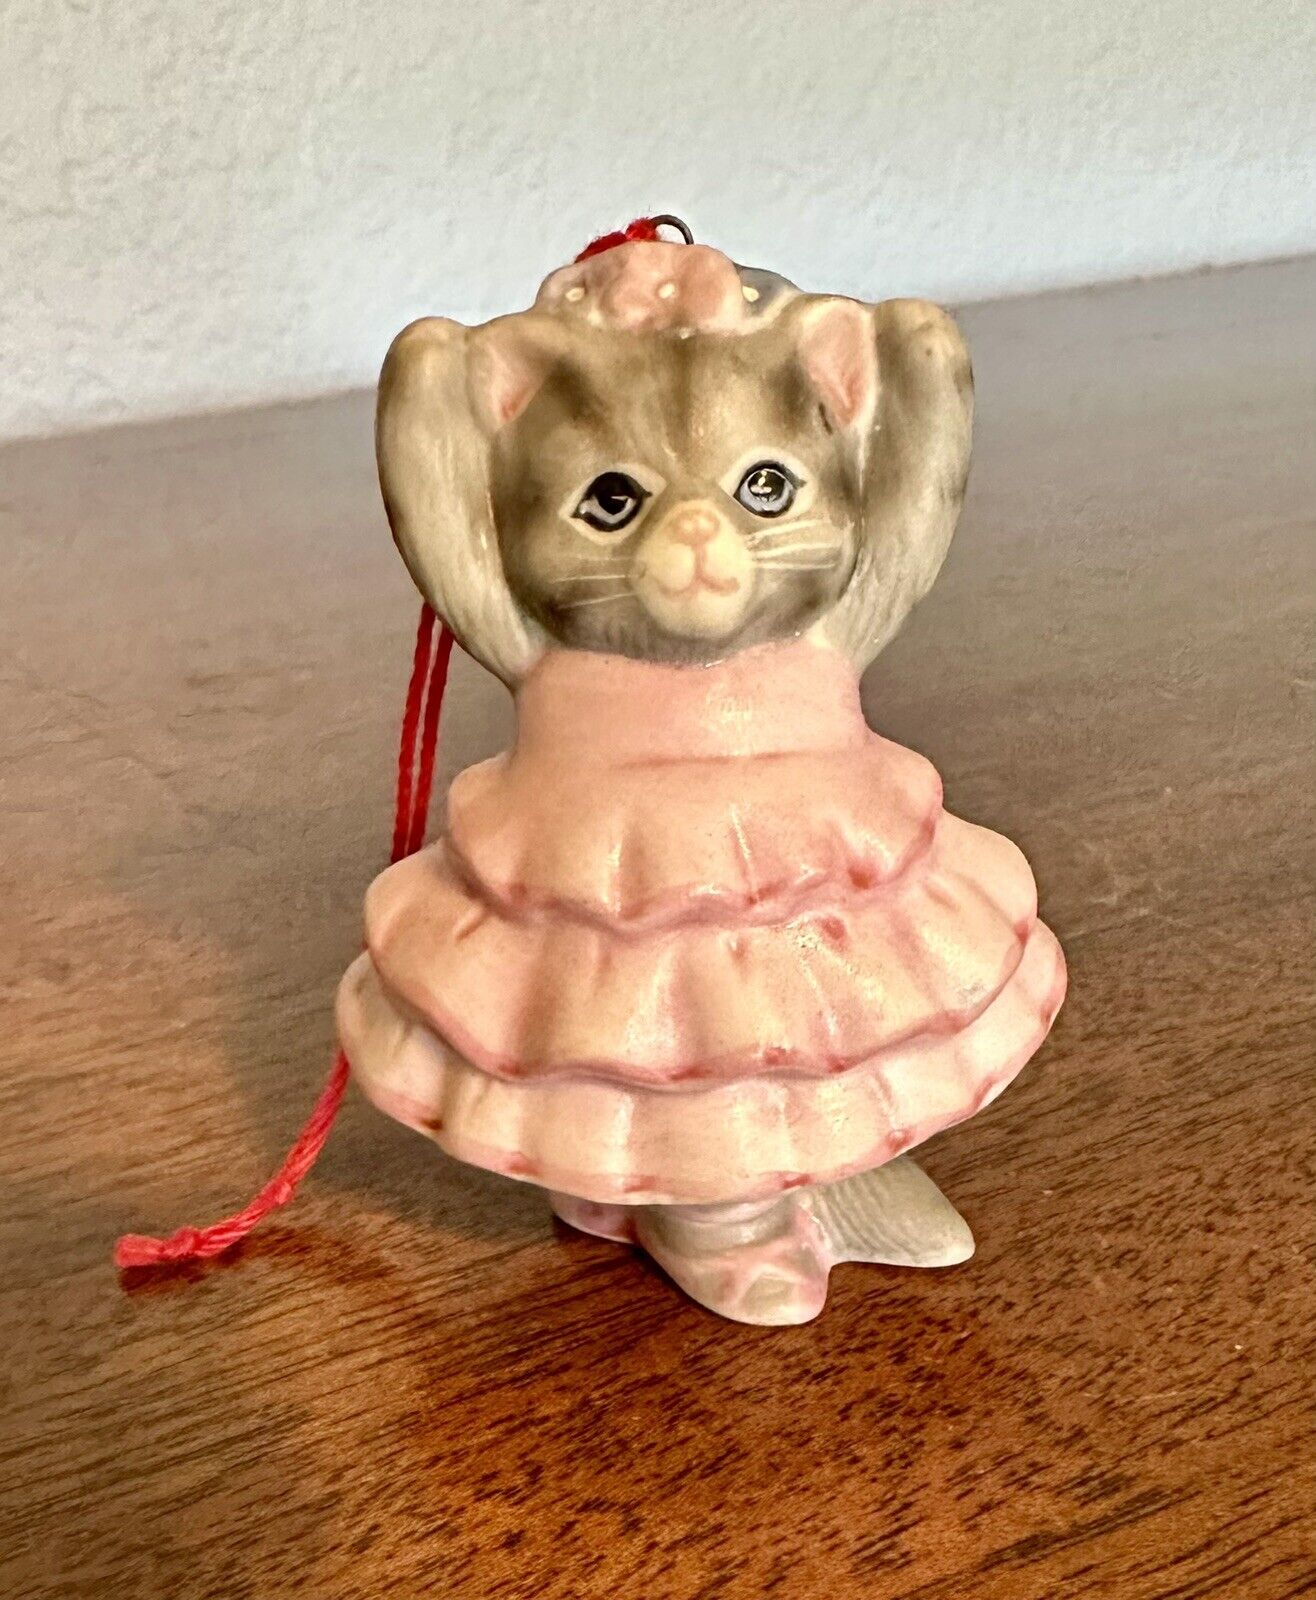 Vtg 1986 Schmid Kitty Cucumber Collectible Ornament Figurine Ballerina Pink Tutu